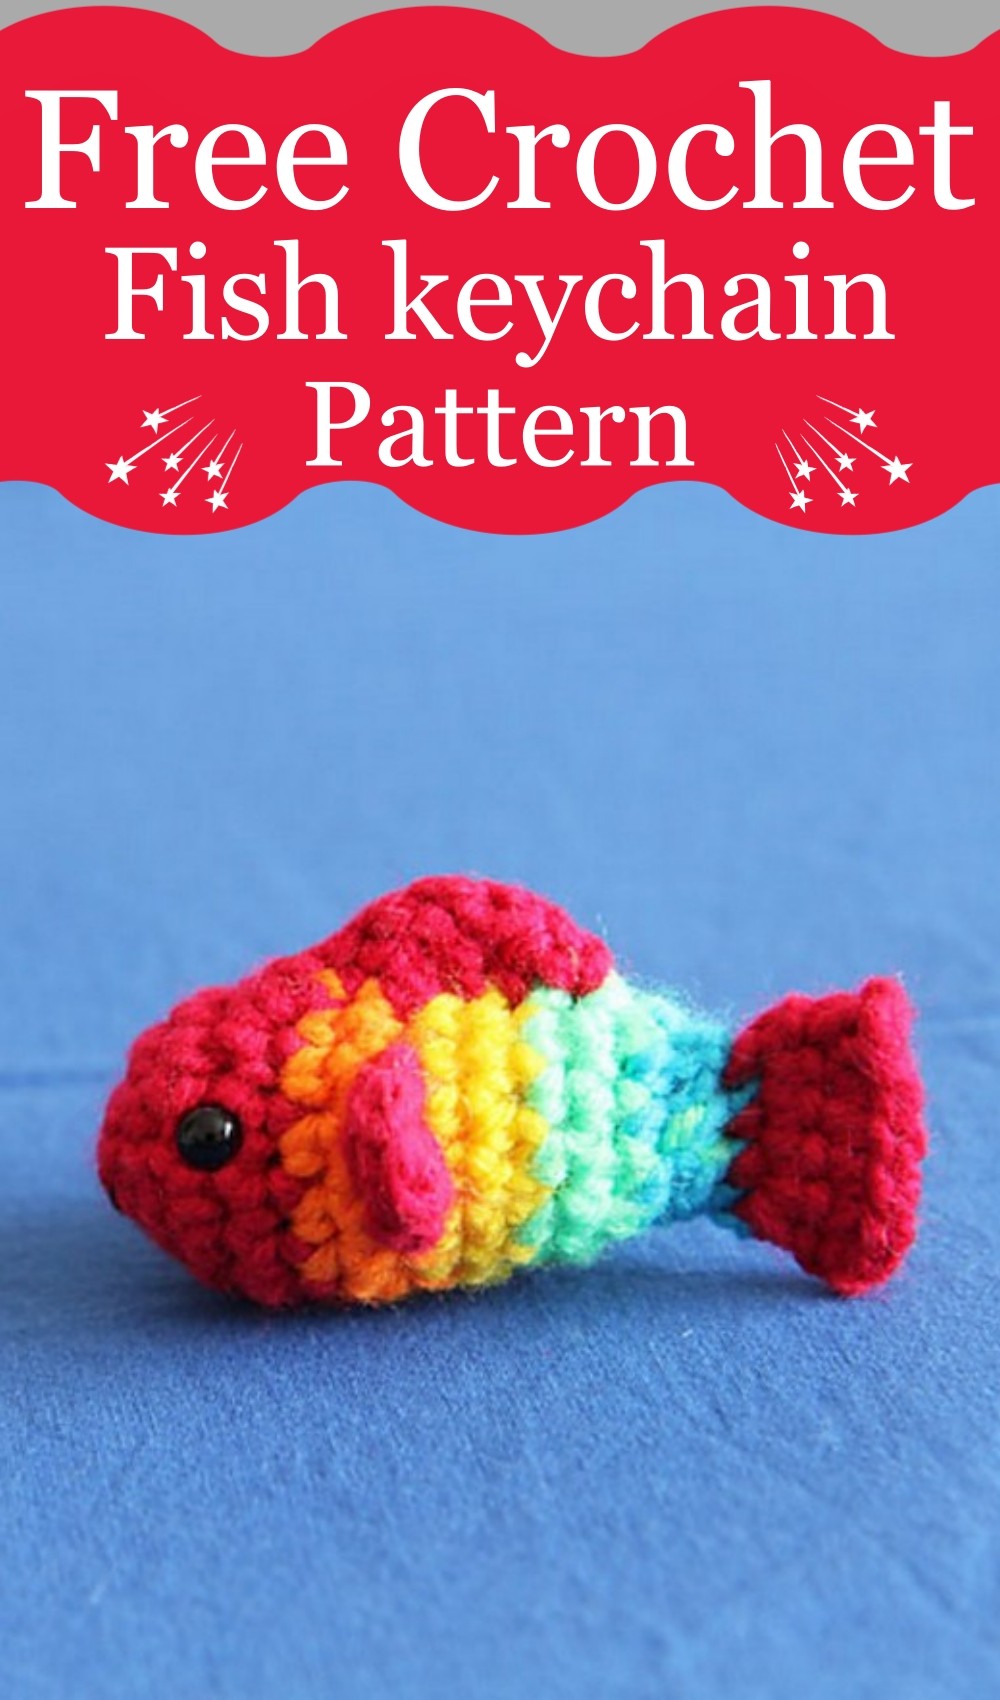 15 Free Easy Crochet Fish Patterns - All Crochet Pattern